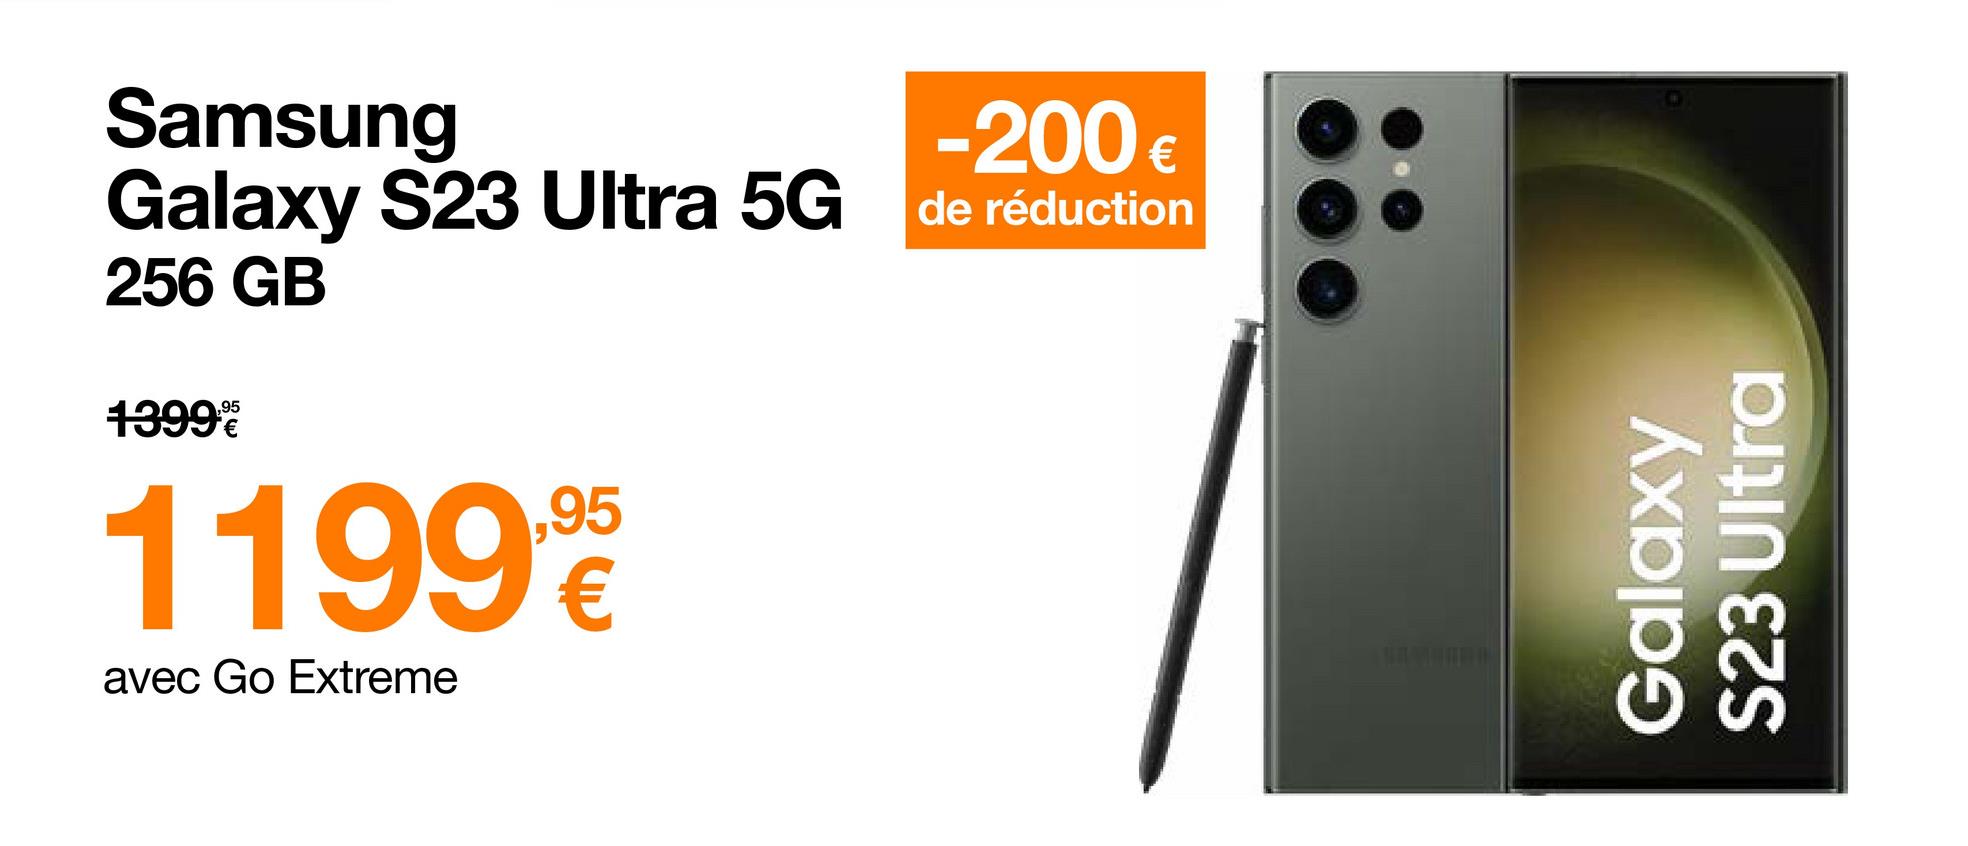 Samsung
-200 €
Galaxy S23 Ultra 5G de réduction
256 GB
13999
1199,99
€
avec Go Extreme
Galaxy
S23 Ultra